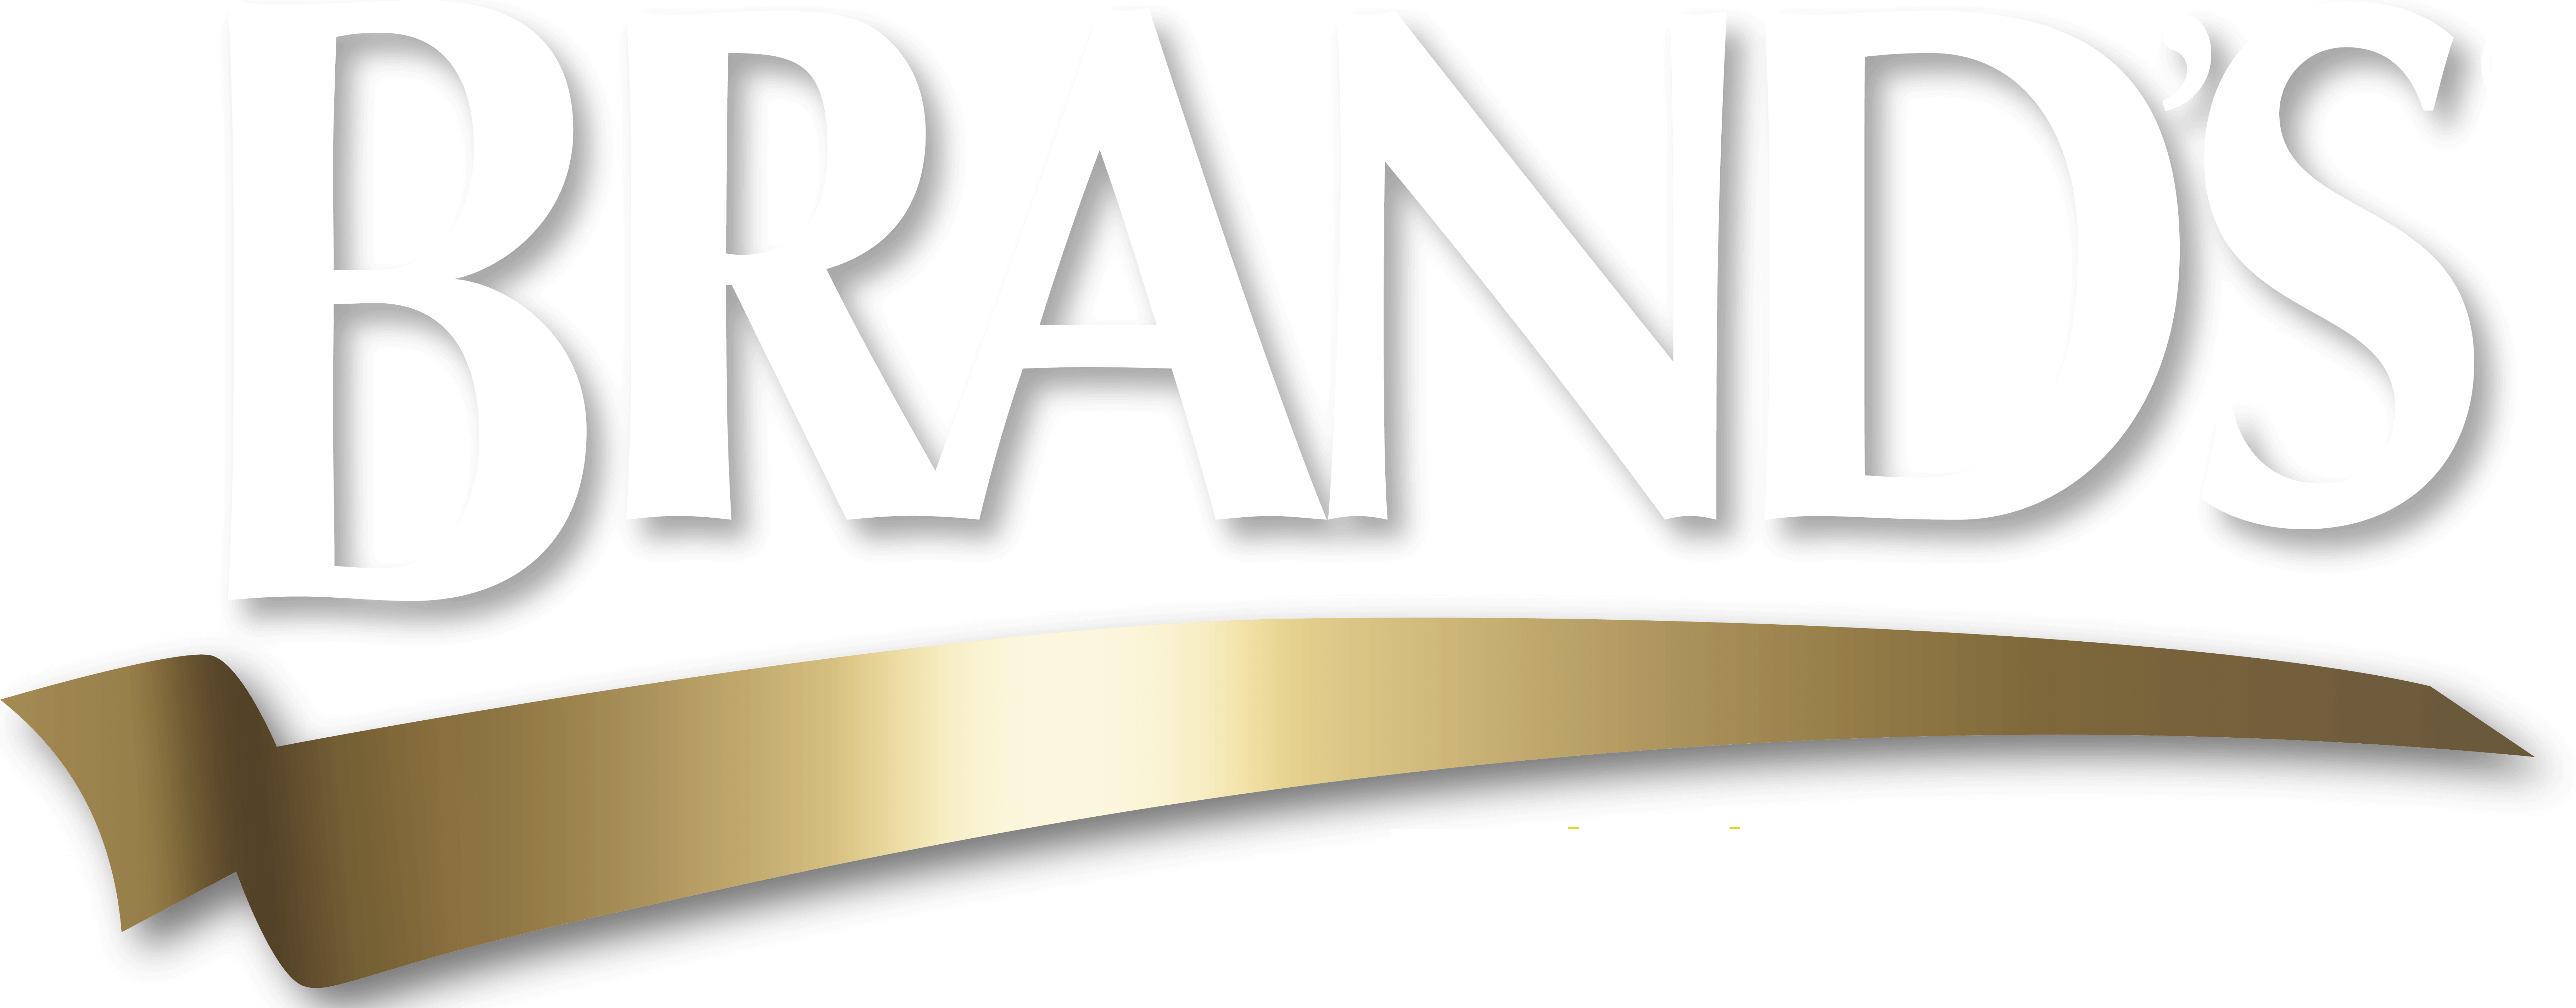 Brand's Logo White-01-01